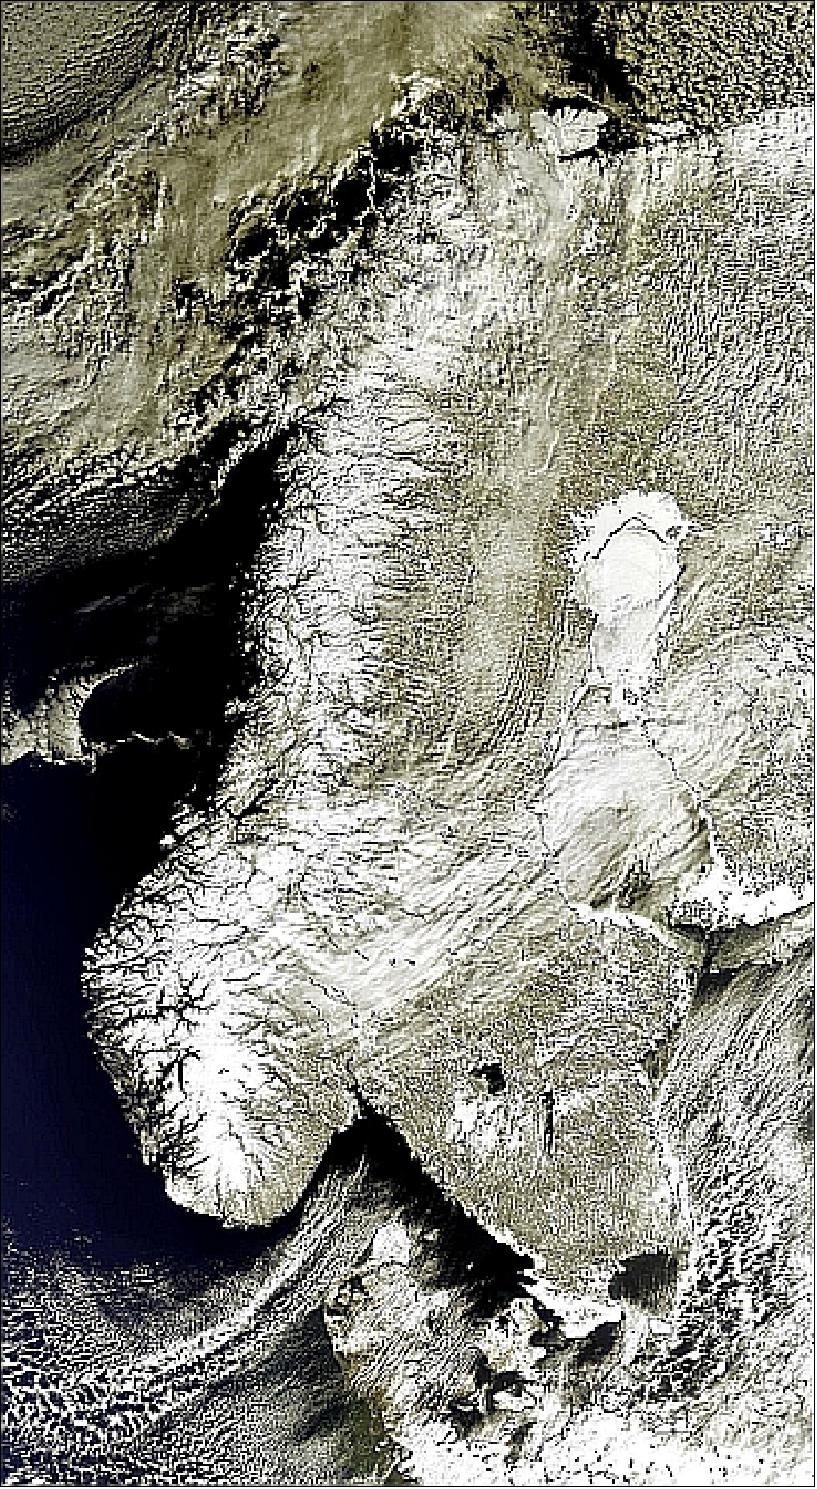 Figure 34: MERIS image of the Scandinavian Peninsula captured on 11 March 2006 (image credit: ESA)